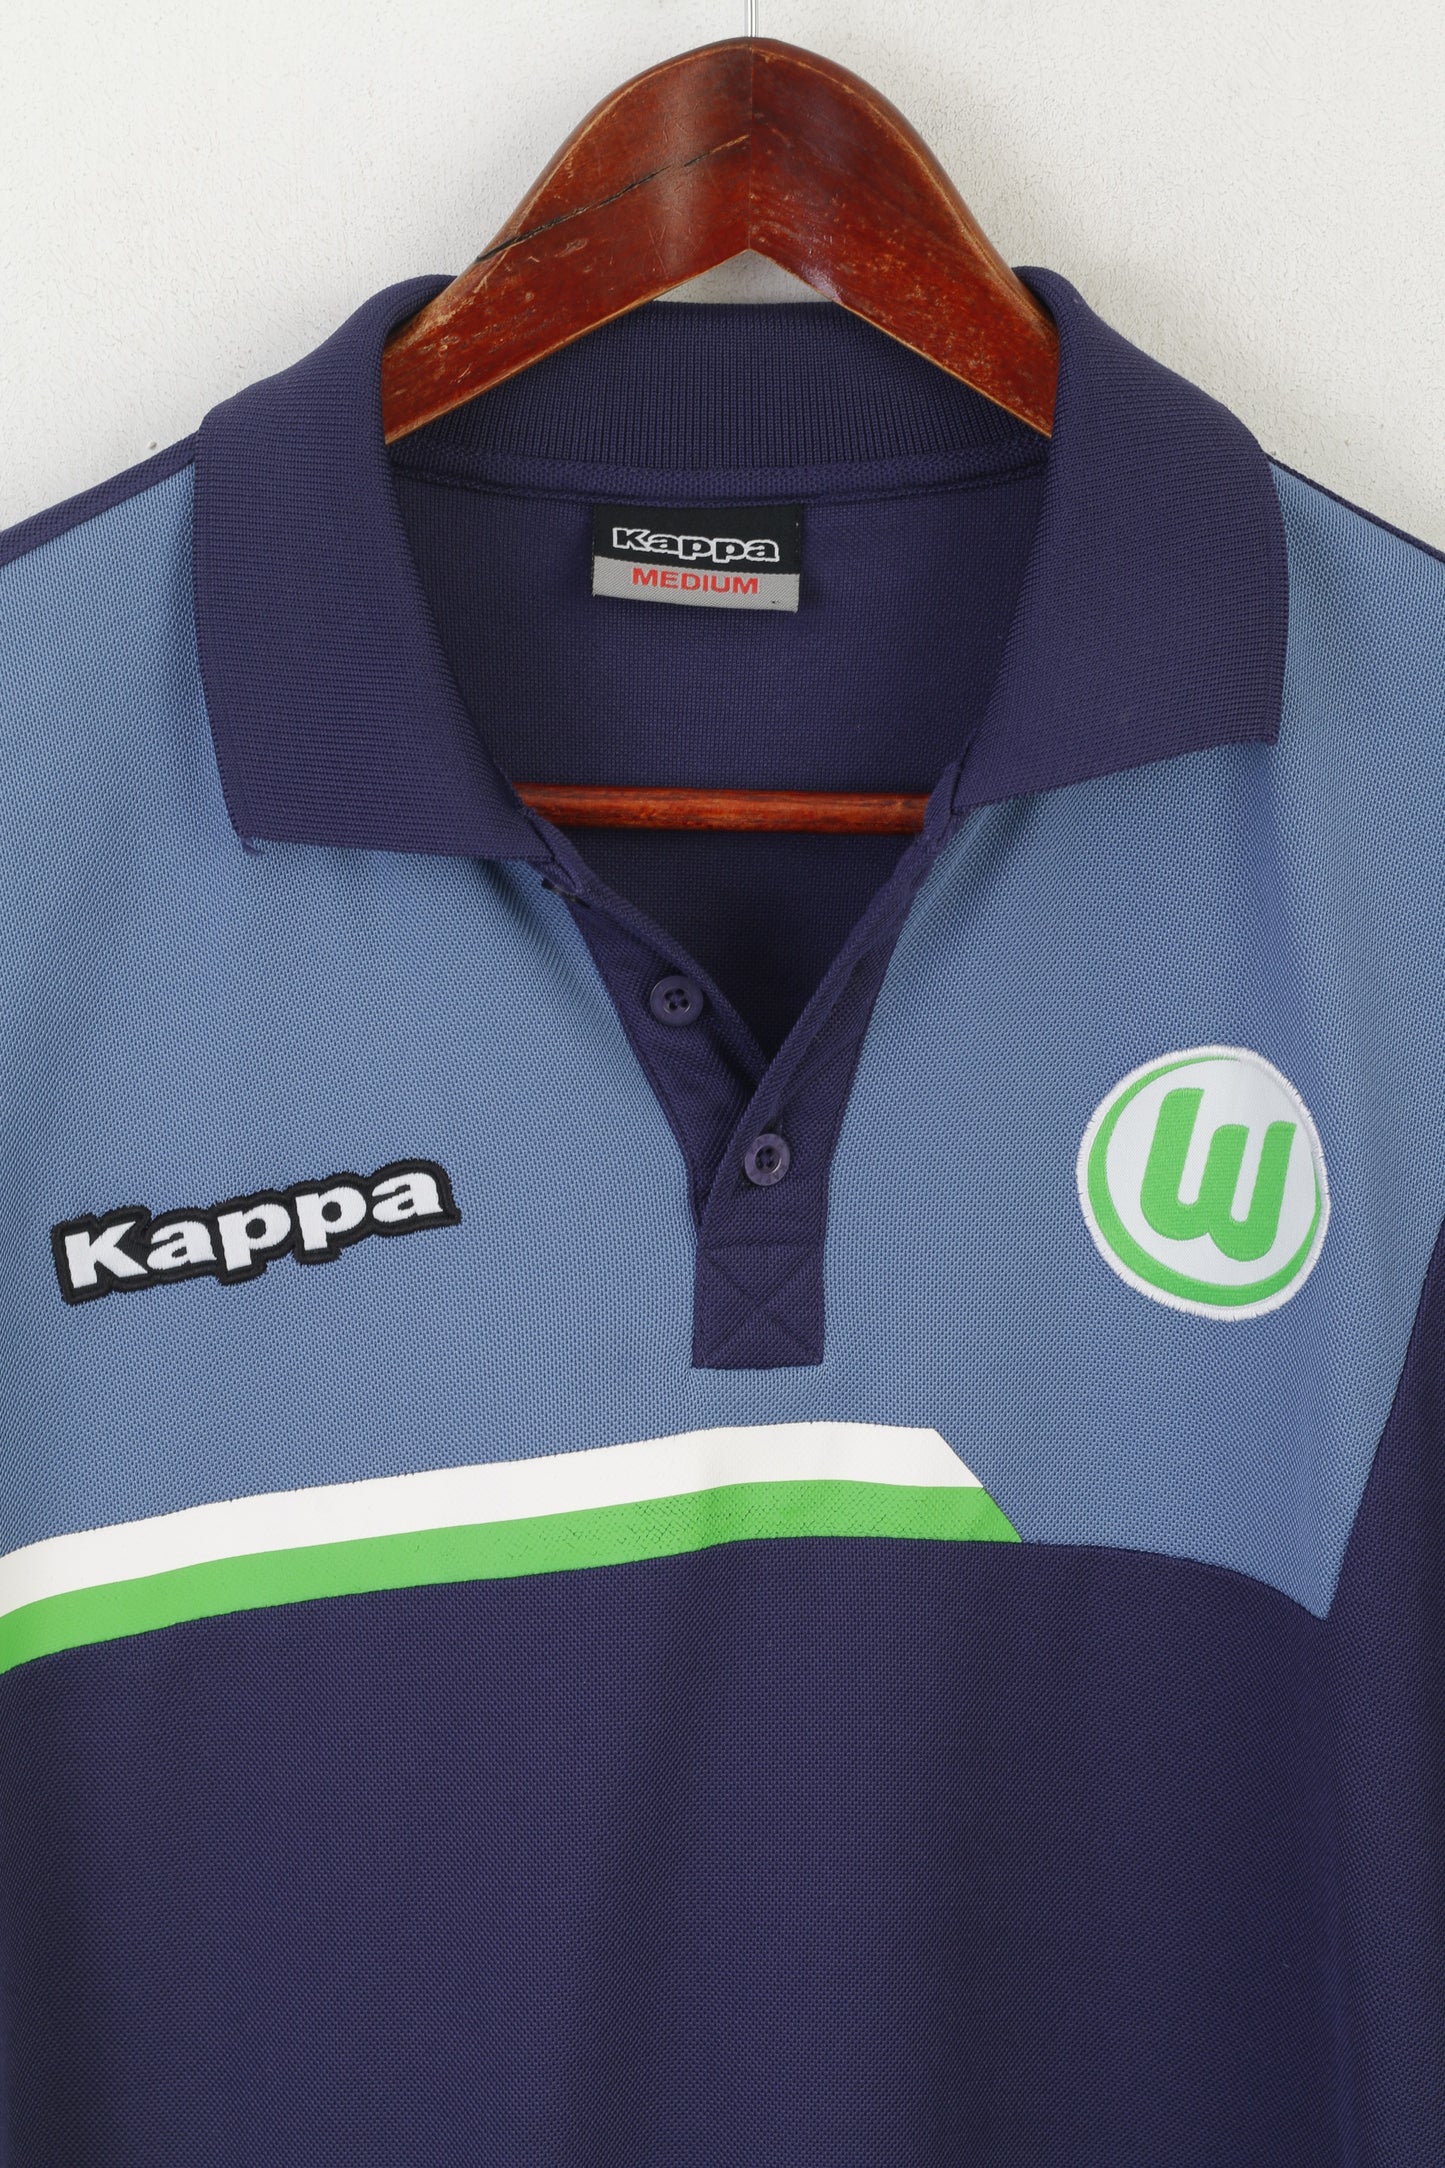 Polo Kappa da uomo M, top in jersey con logo sportivo da tennis vintage lucido blu scuro